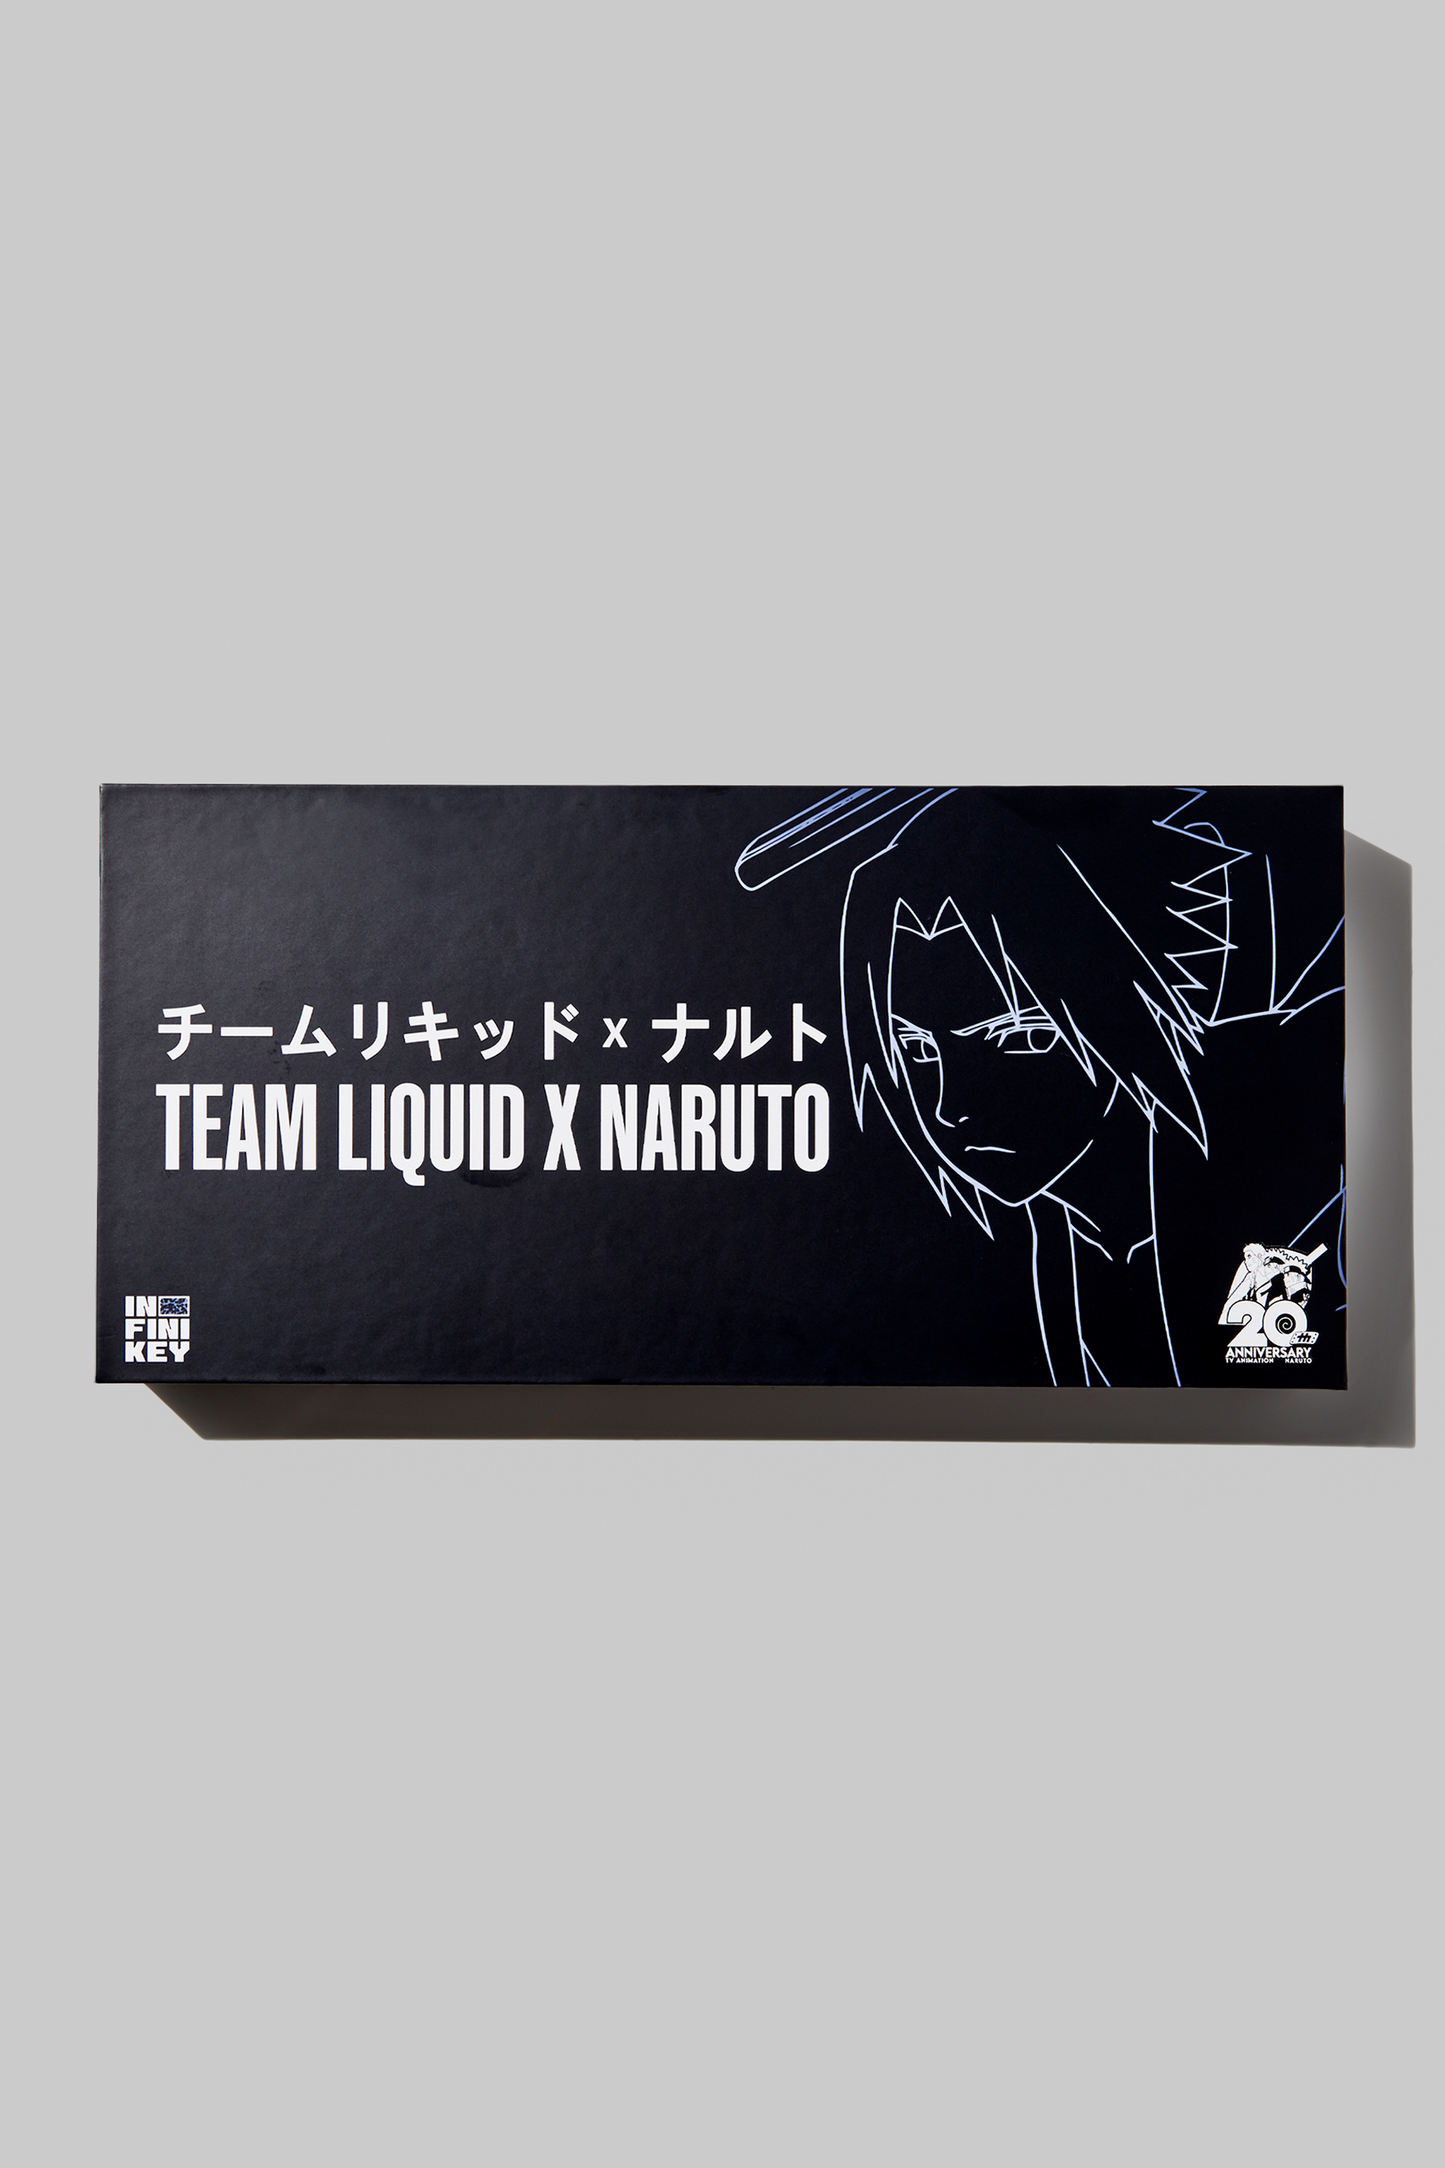 LIQUID X NARUTO 20Y SASUKE KEYCAP BASE KIT - Team Liquid